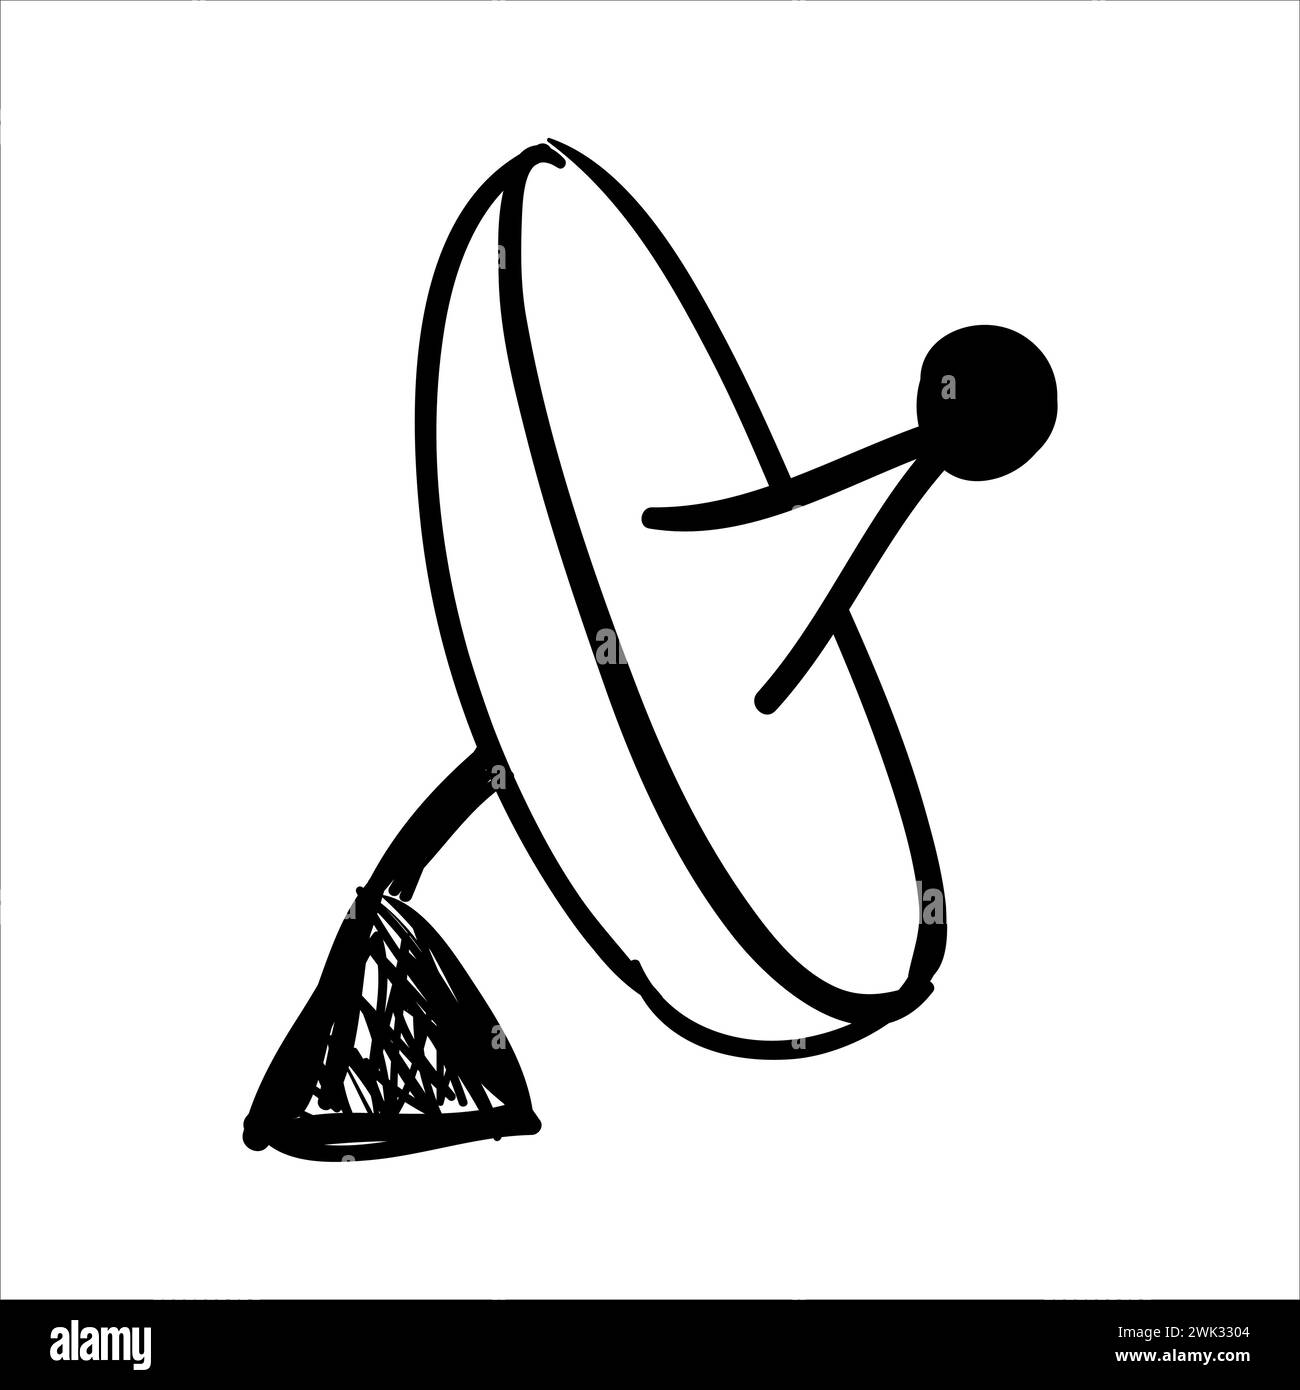 art illustration hand draw vector symbol icon of satellite dish antenna Stock Vector